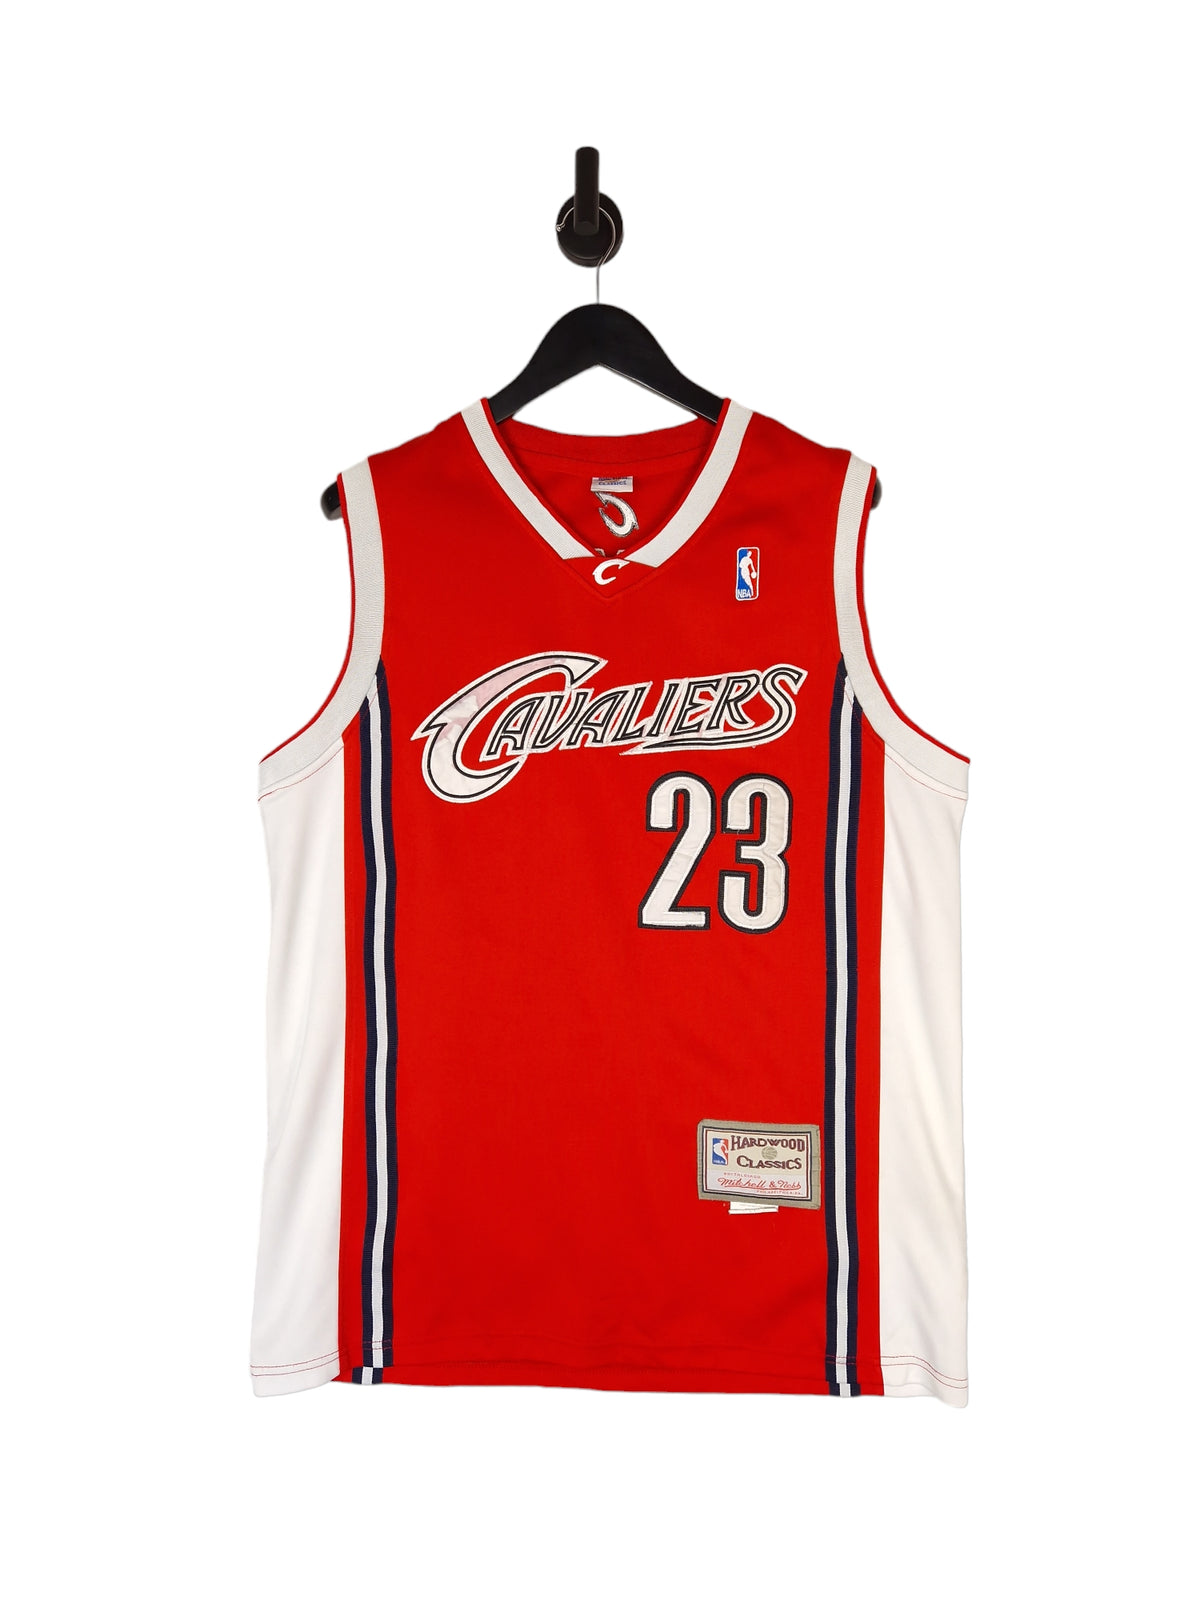 NBA Cleveland Cavaliers 23 James Basketball Jersey - Size XL